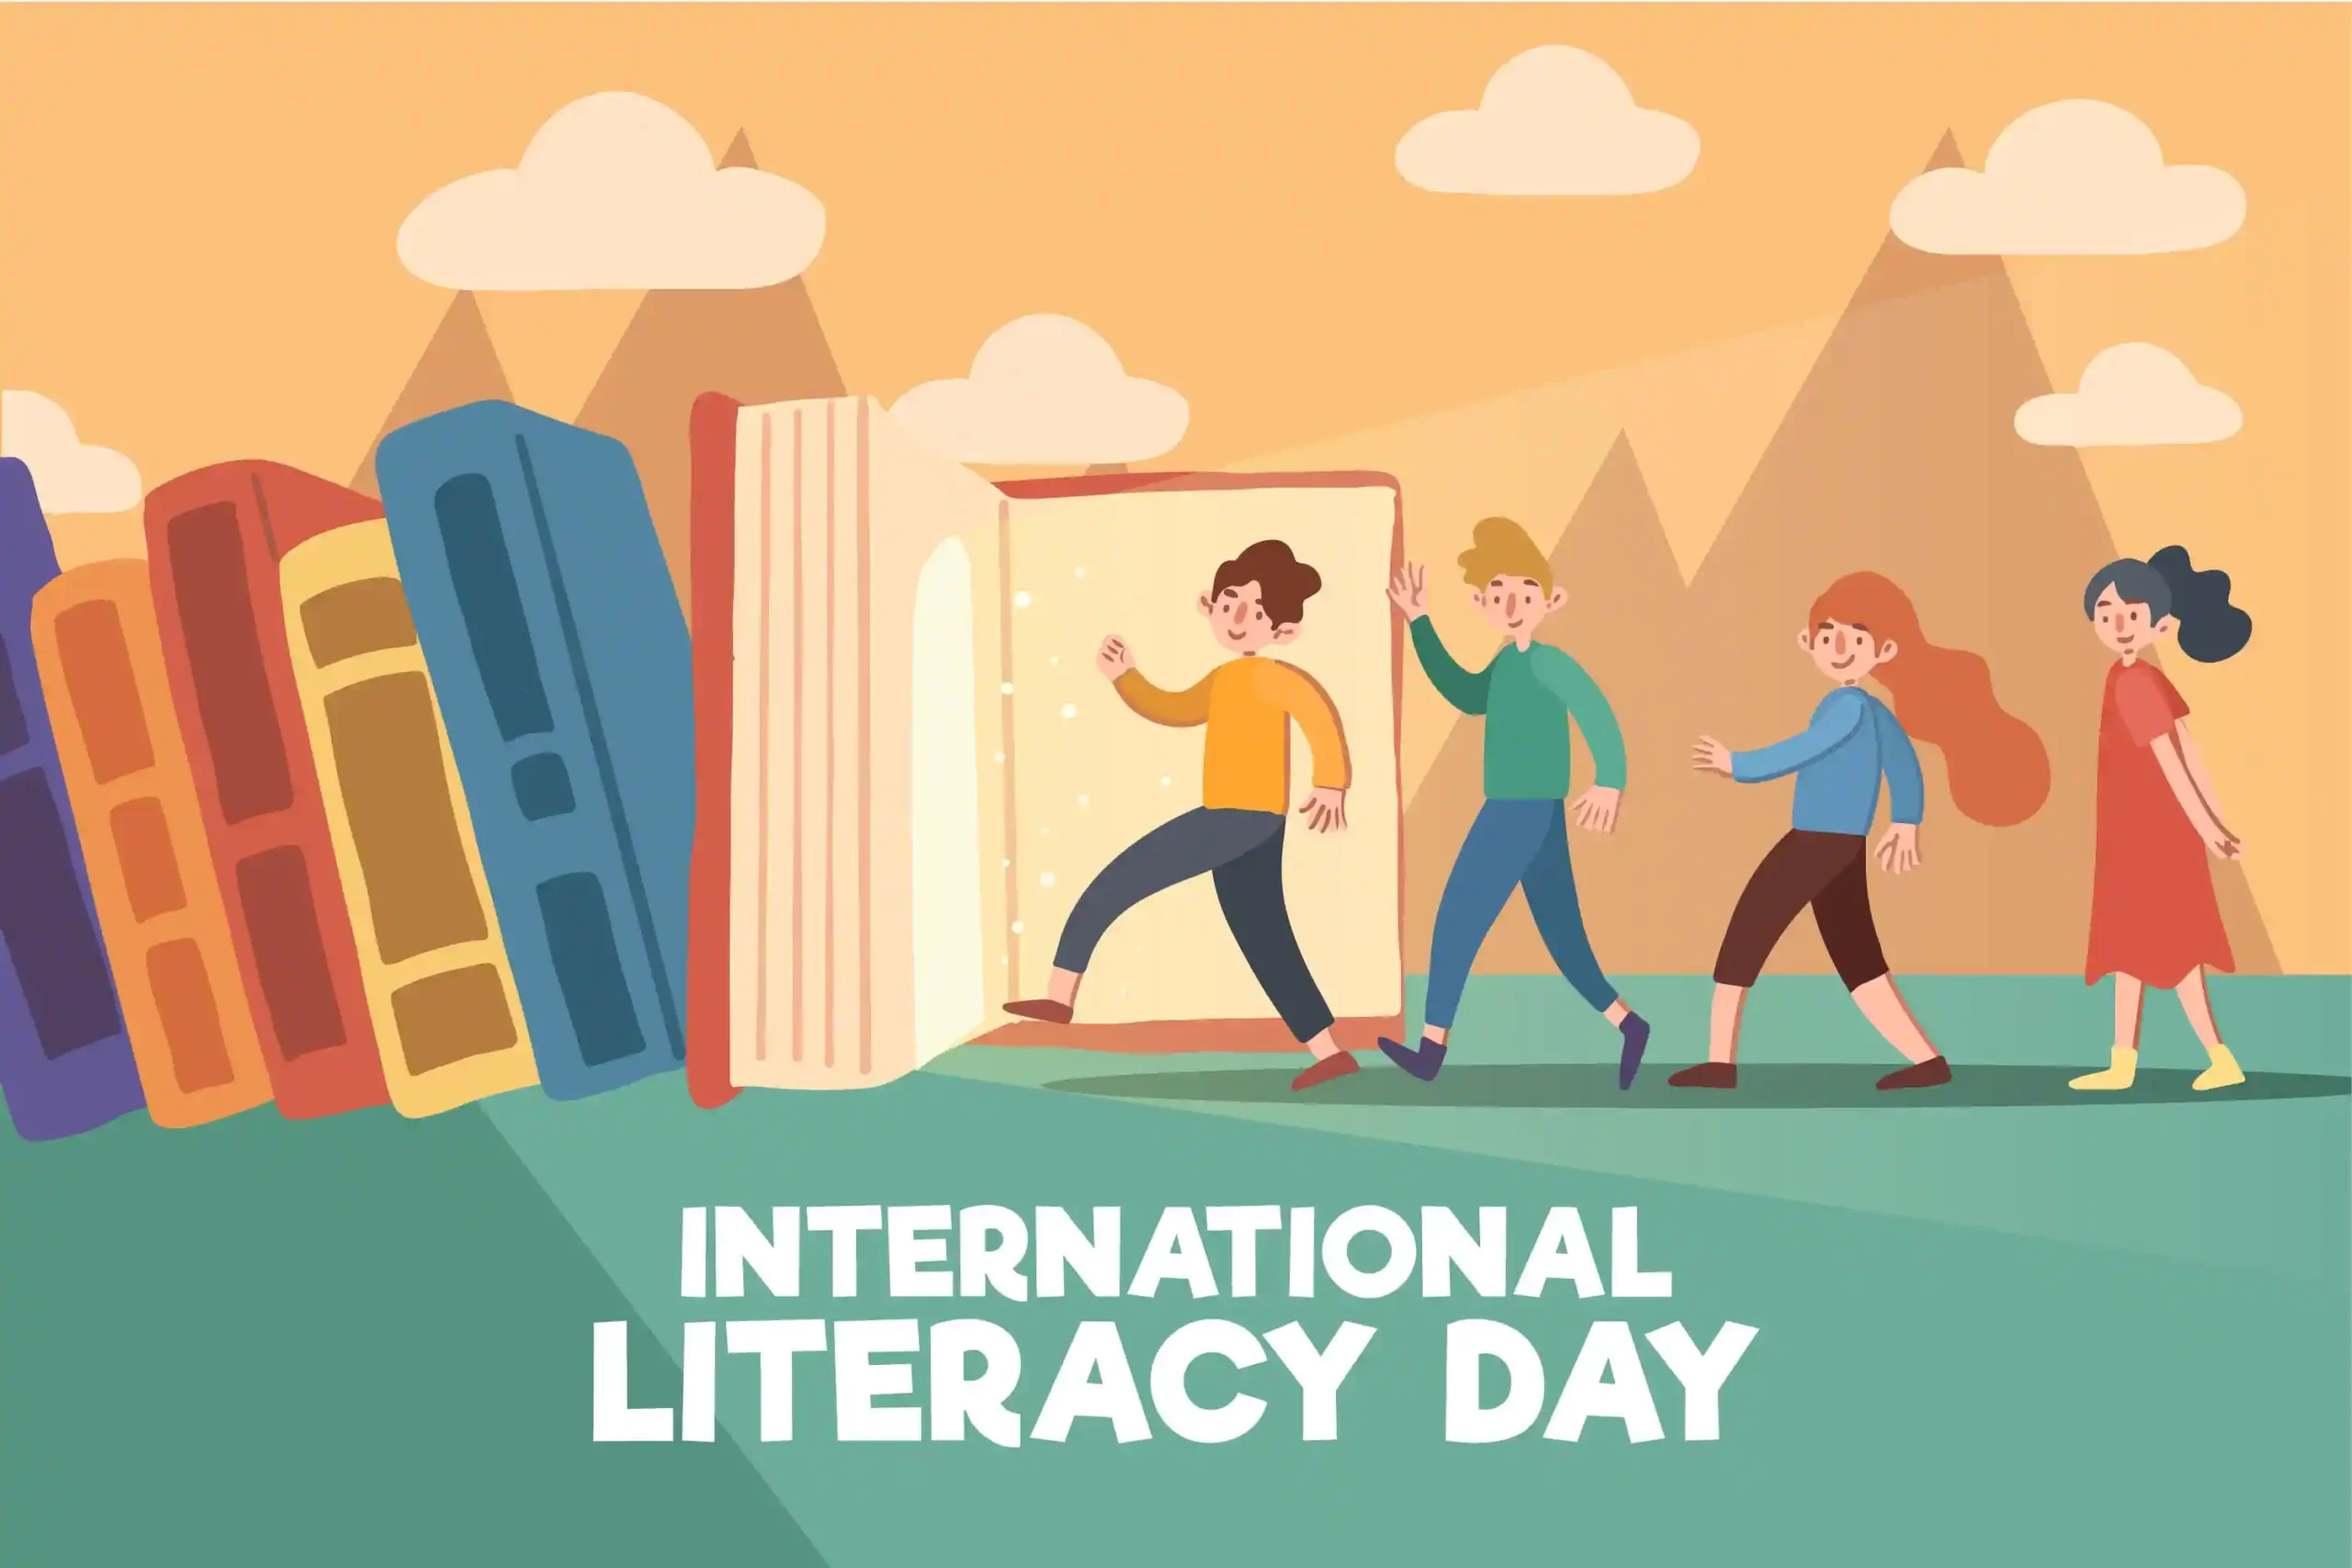 International Literacy Day today